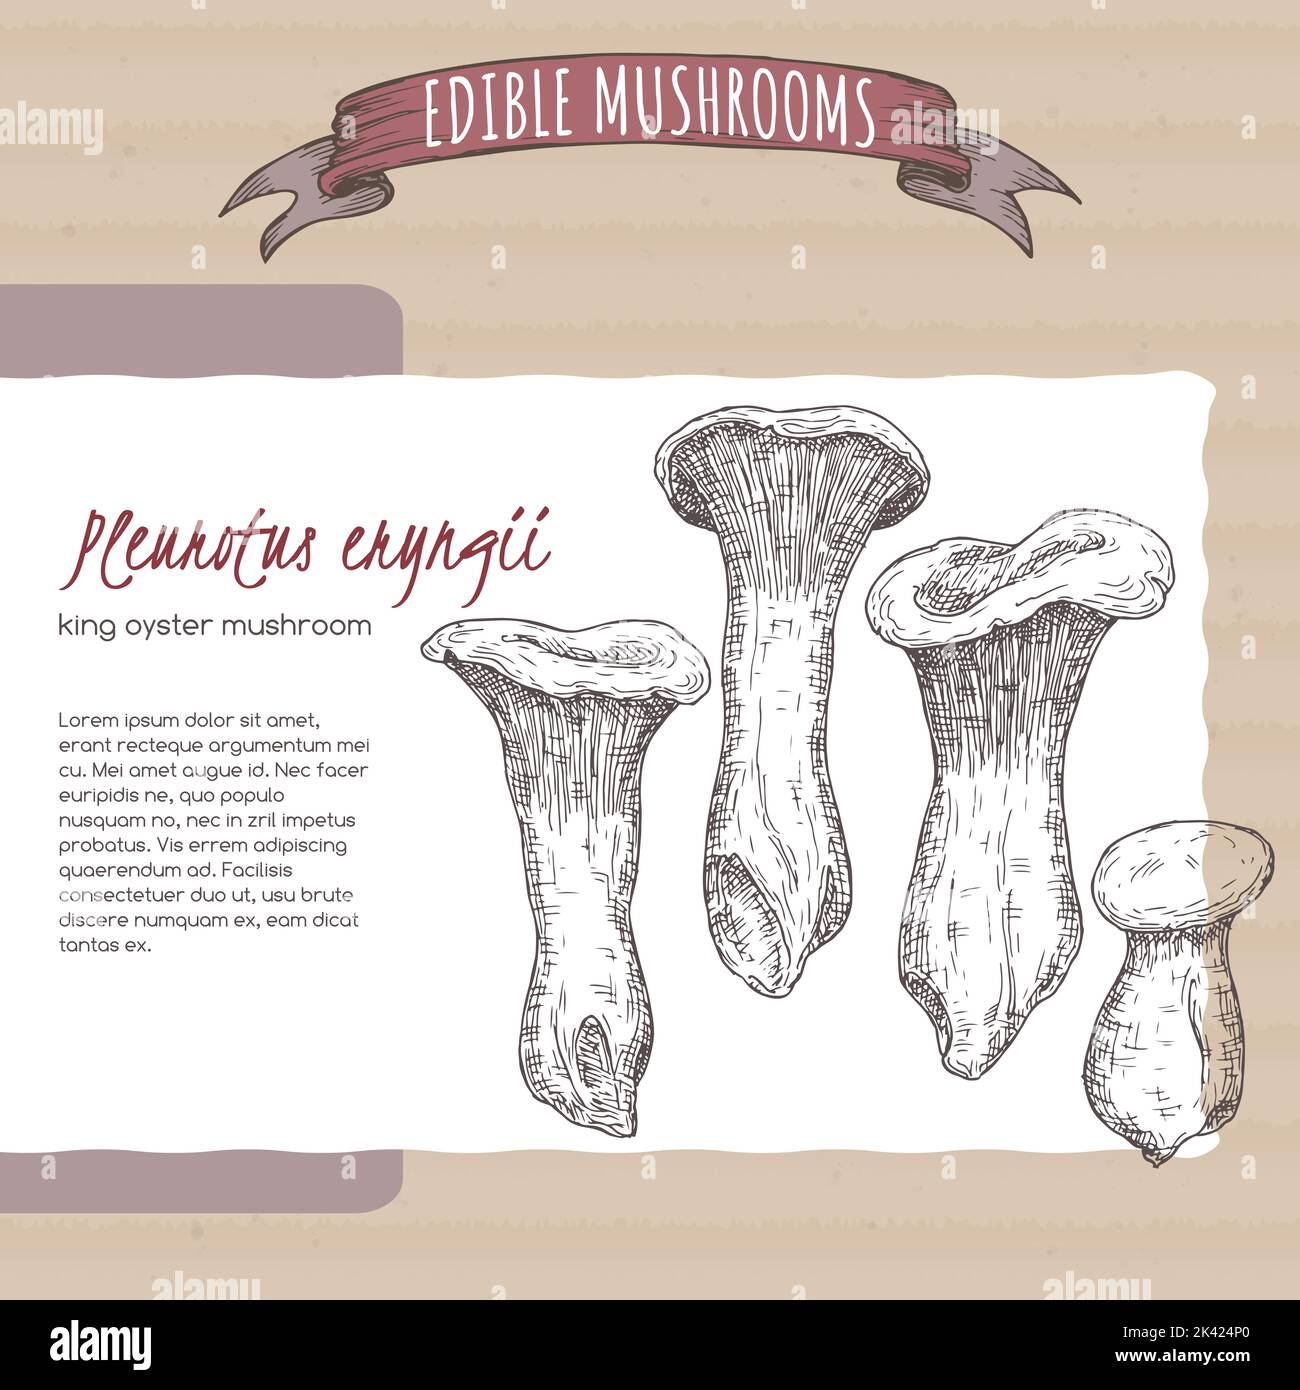 Pleurotus eryngii aka king oyster mushroom sketch on cardboard background. Edible mushrooms series. Stock Vector